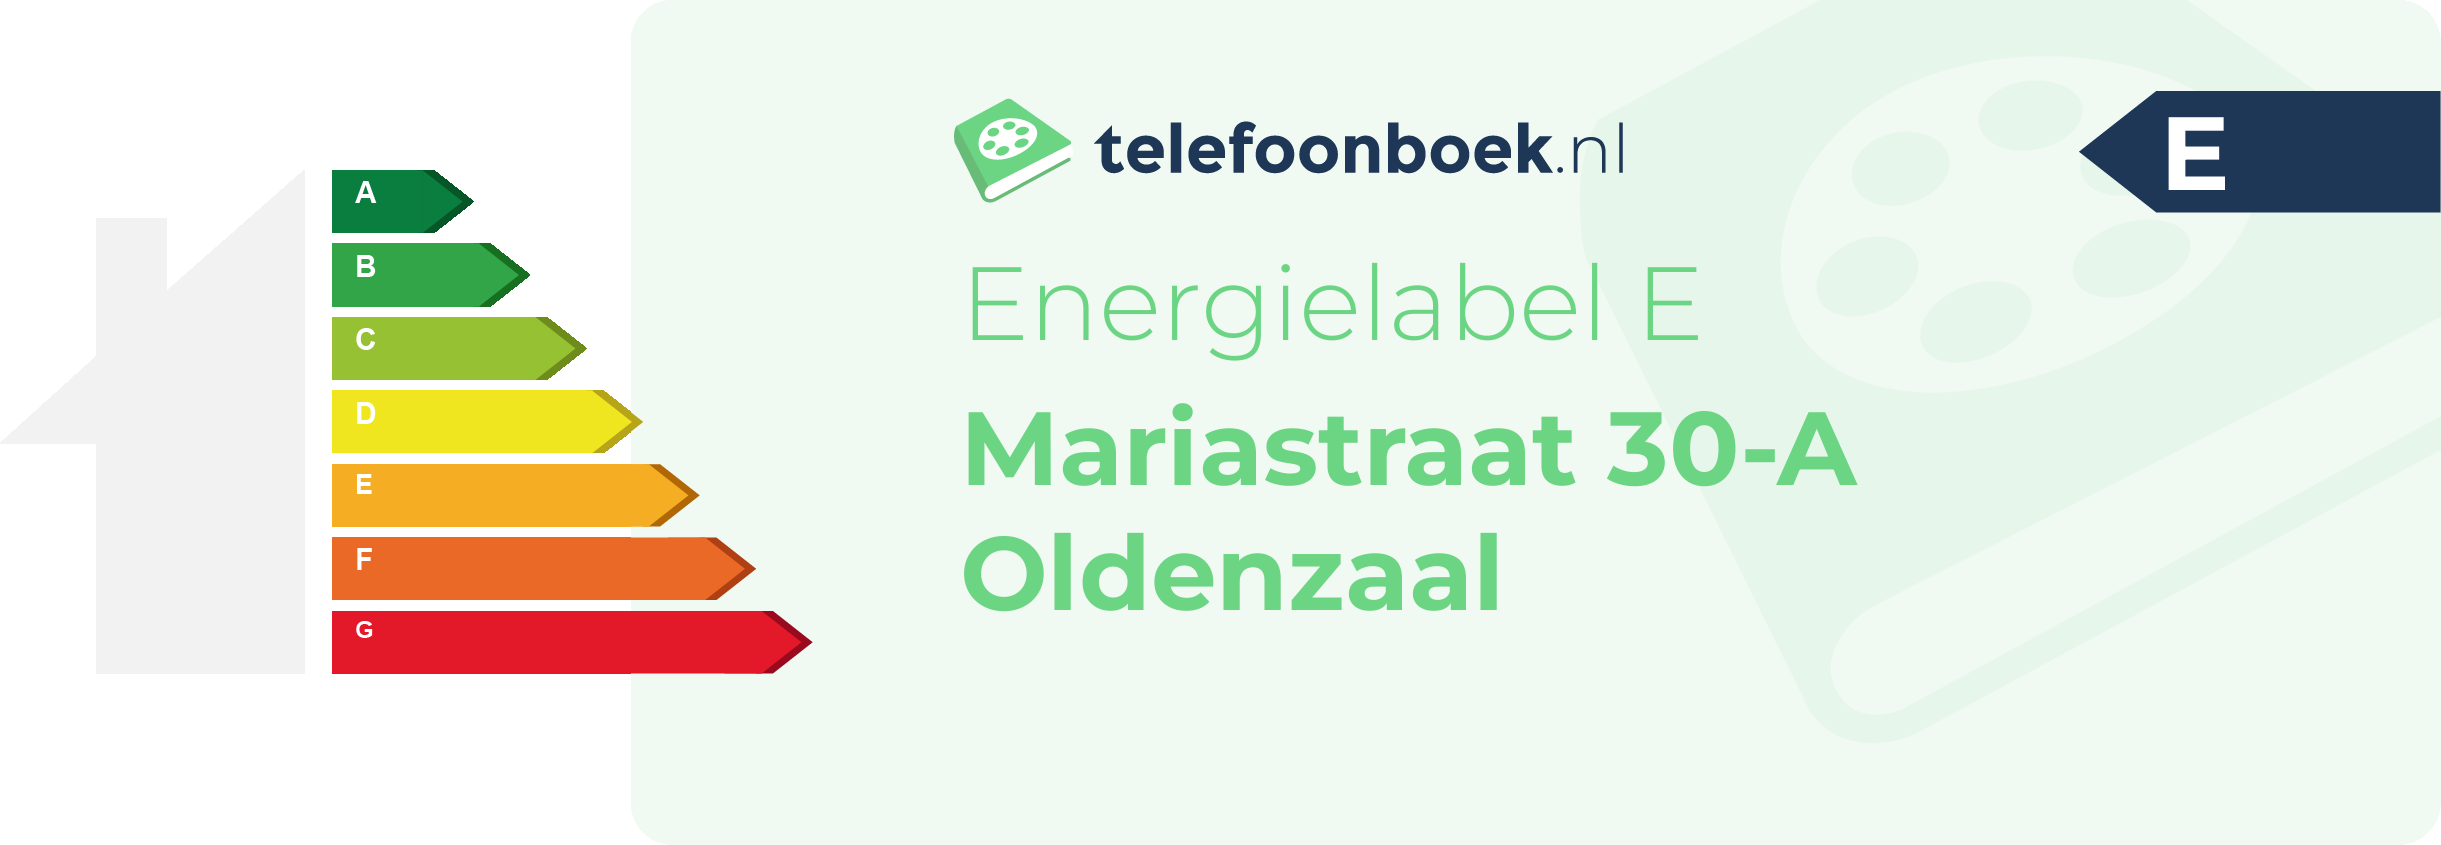 Energielabel Mariastraat 30-A Oldenzaal